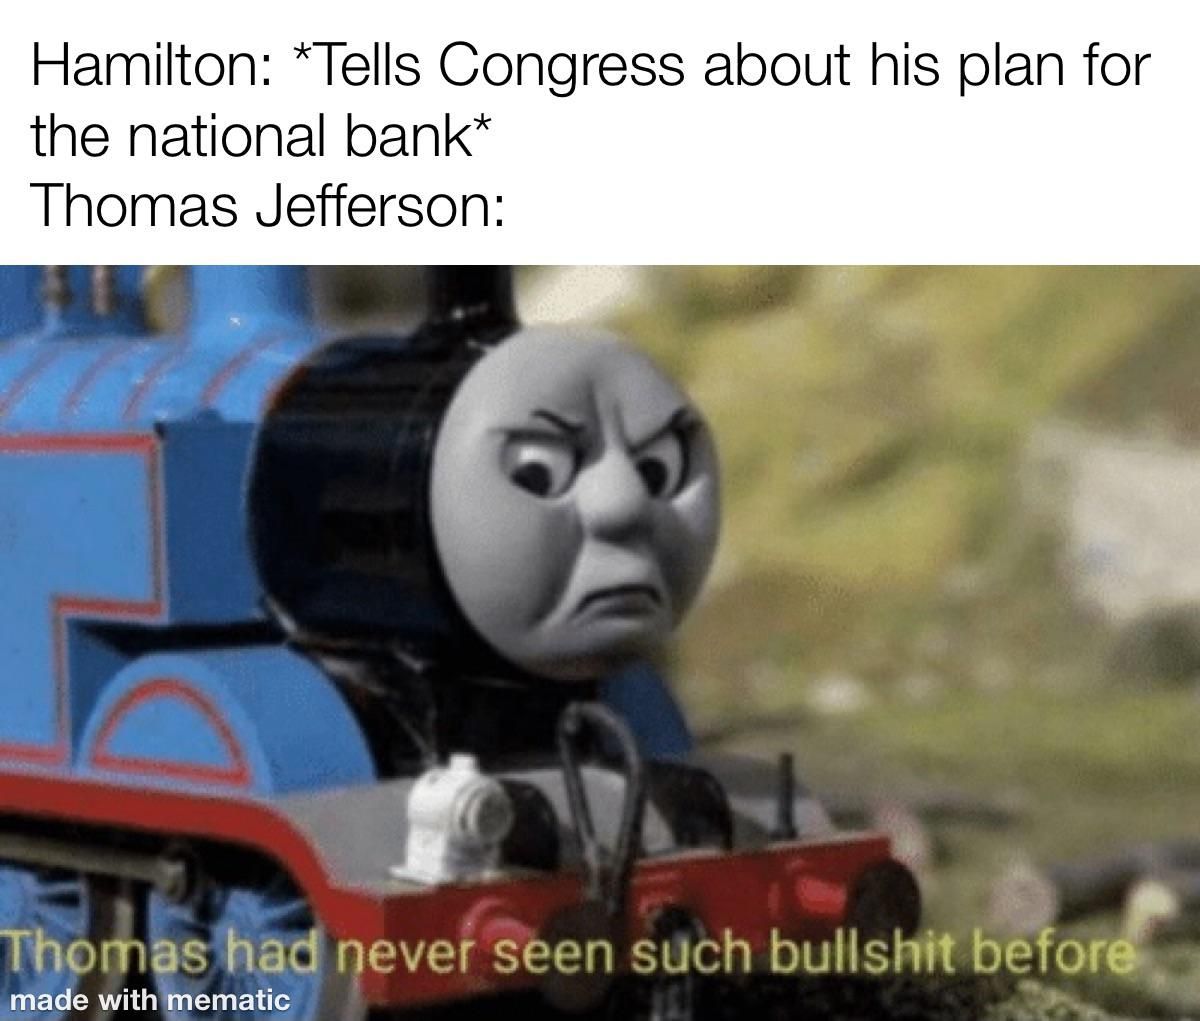 I gotta get this plan through Congress